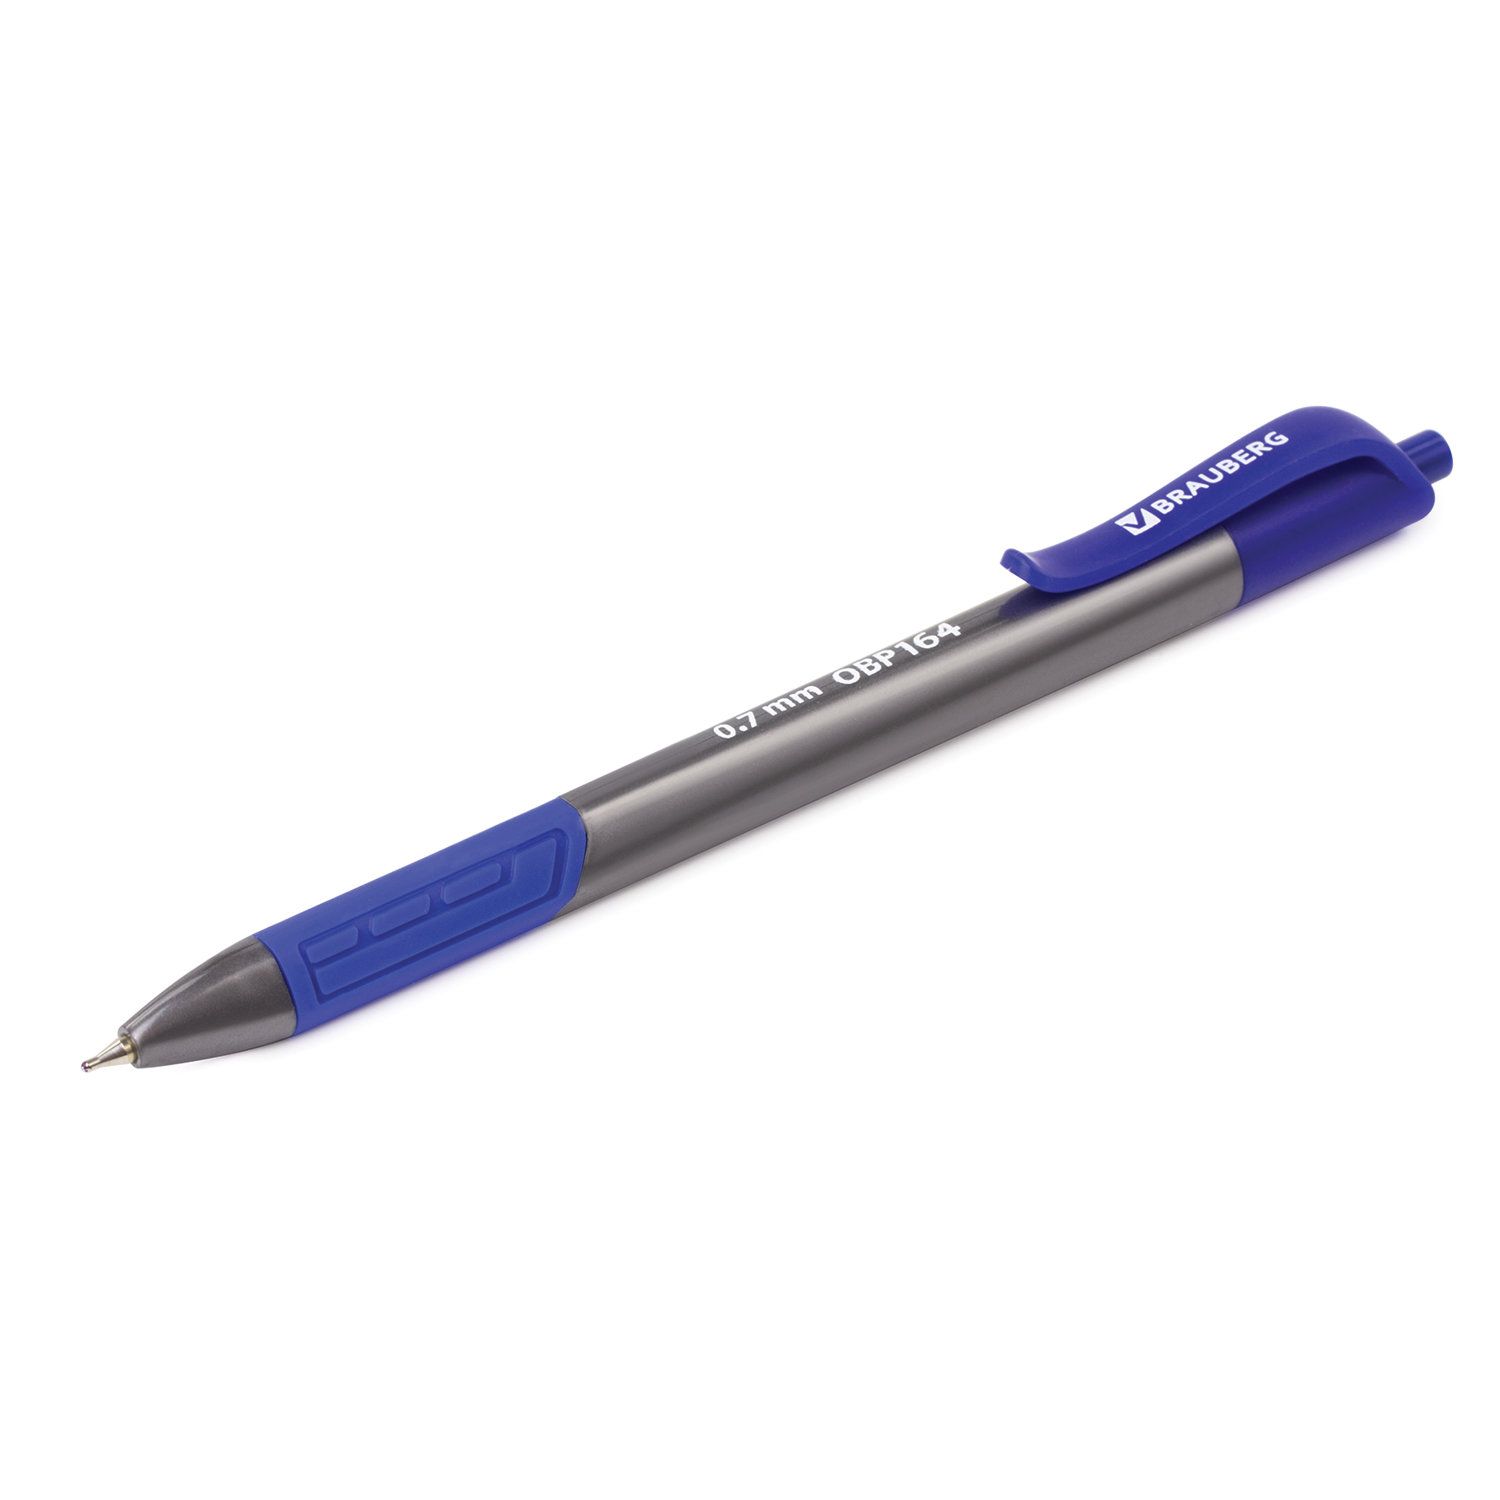 Brauberg 0.7. Ручка БРАУБЕРГ 0.7. Ручка шариковая масляная автоматическая BRAUBERG. Ручка BRAUBERG 0.7 мм автоматическая Extra Glide. Ручка БРАУБЕРГ автоматическая синяя.